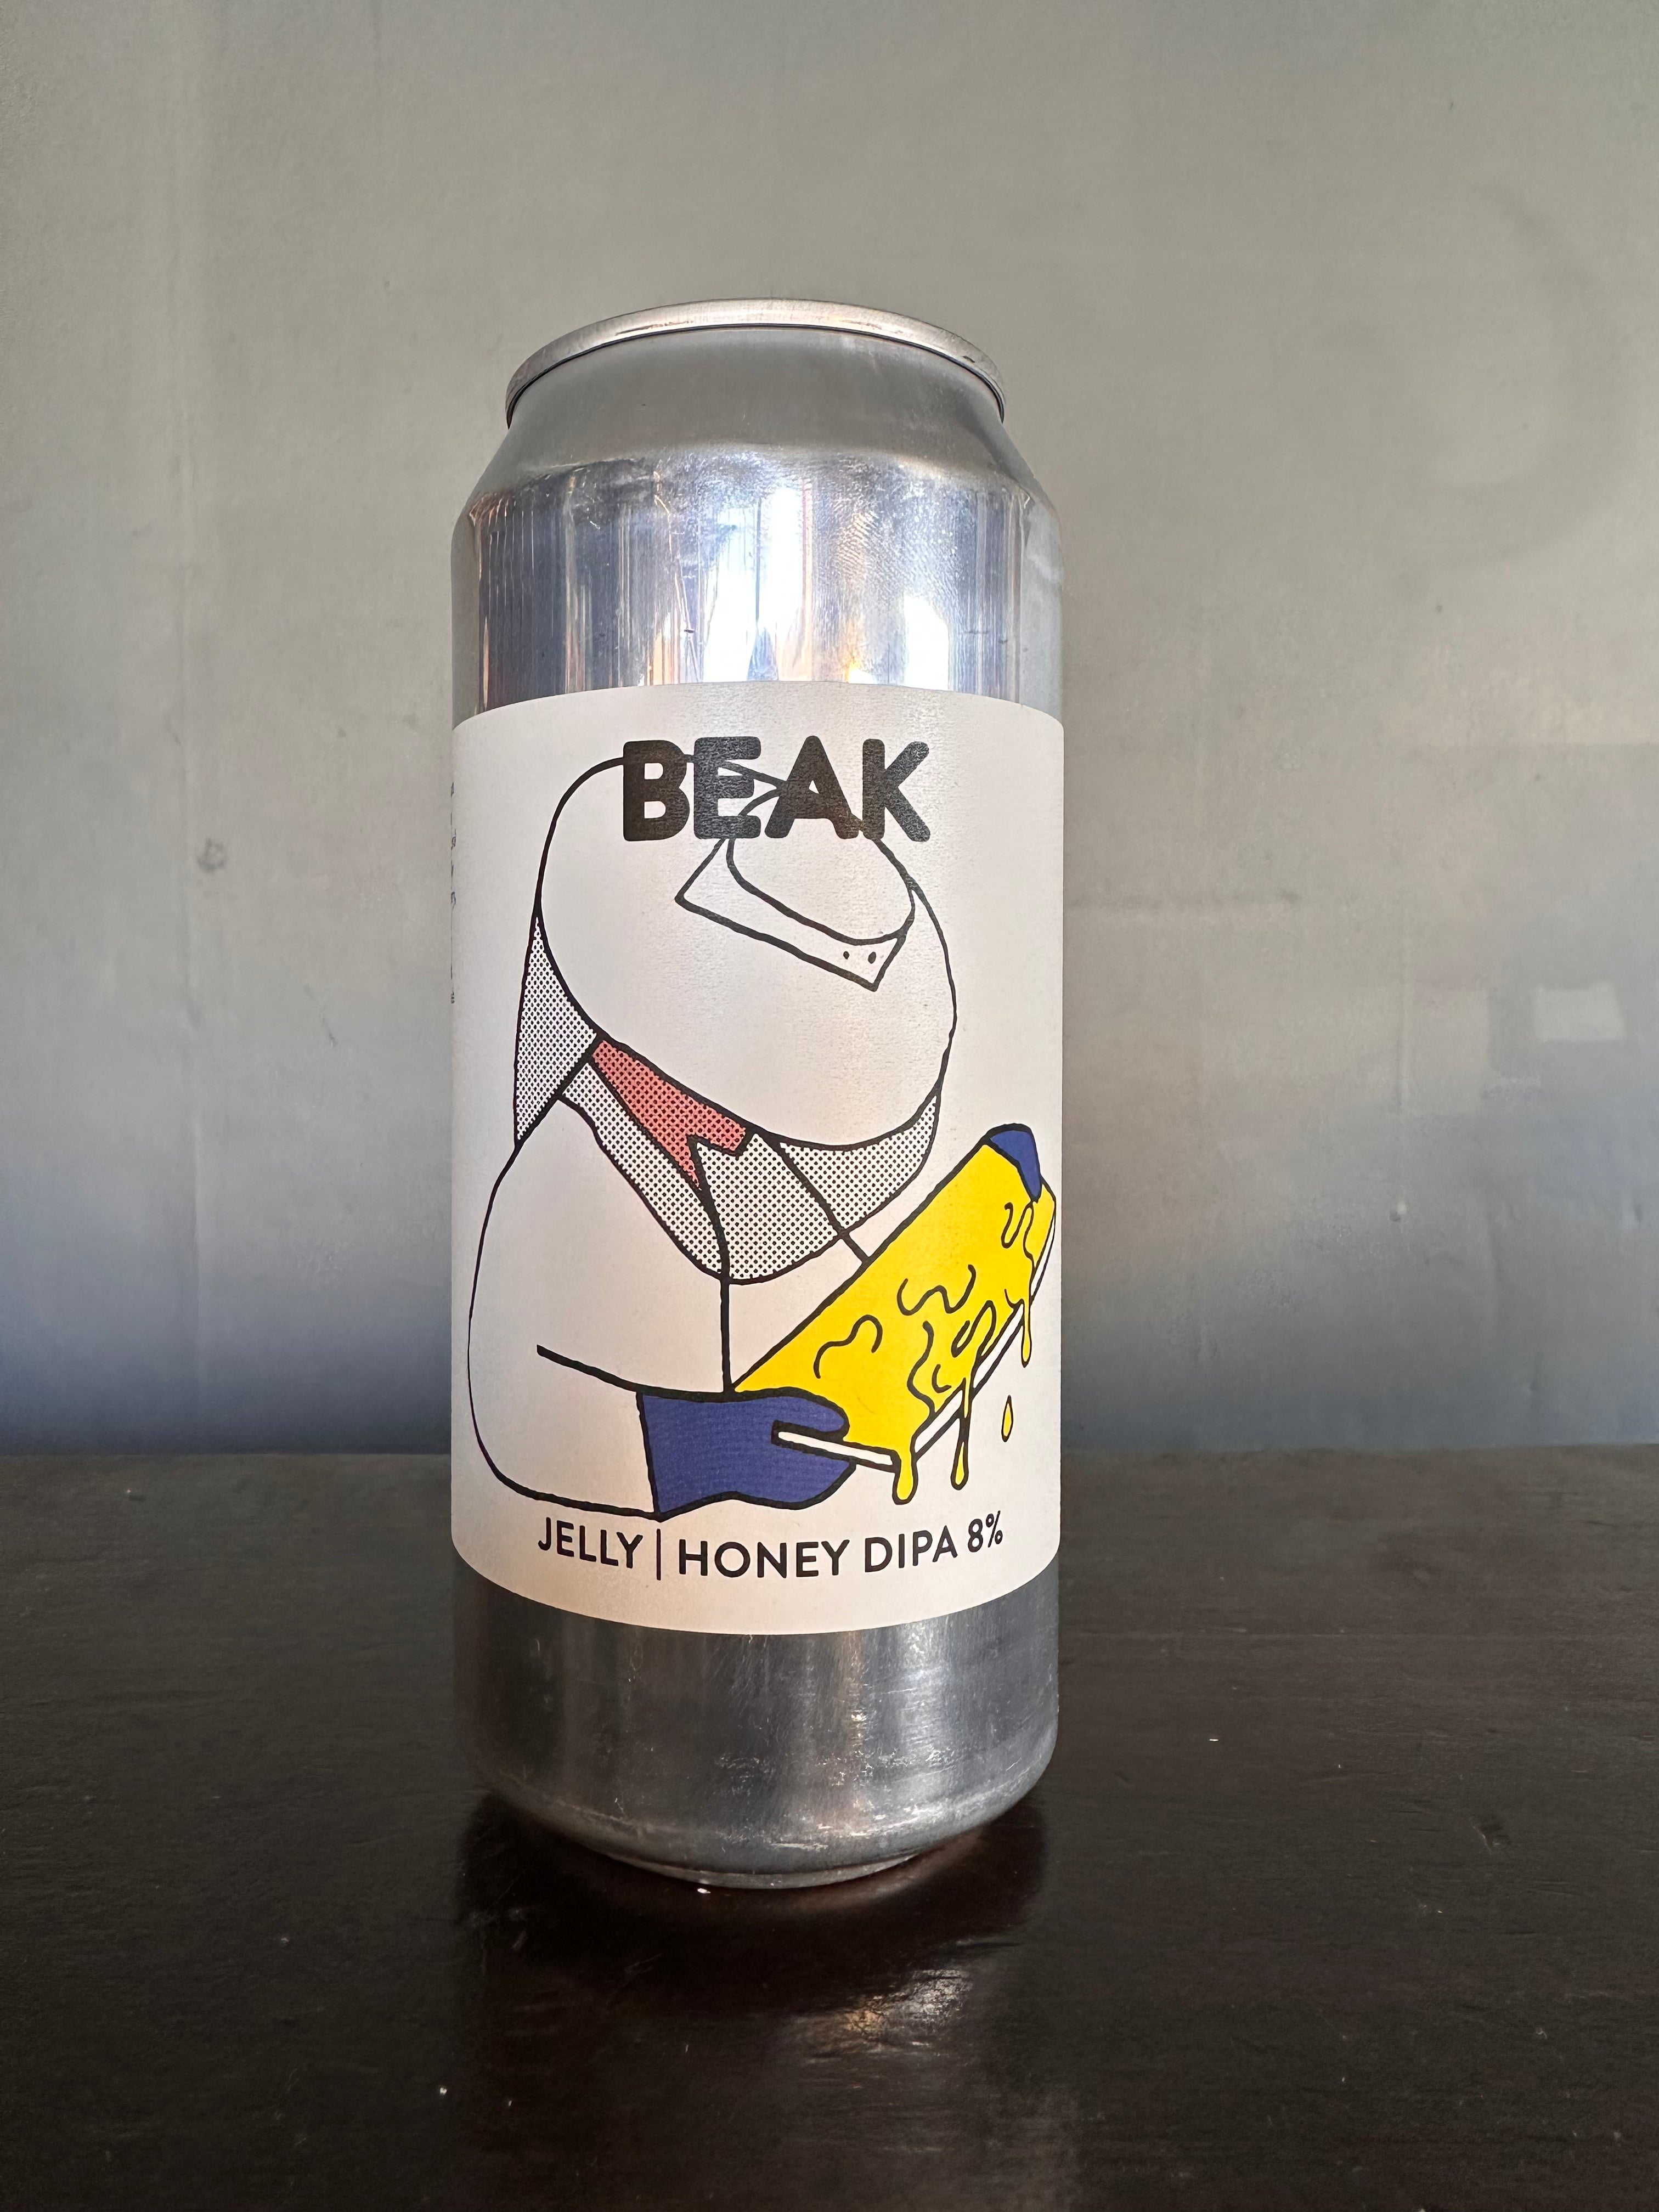 Beak Jelly Honey DIPA 8%